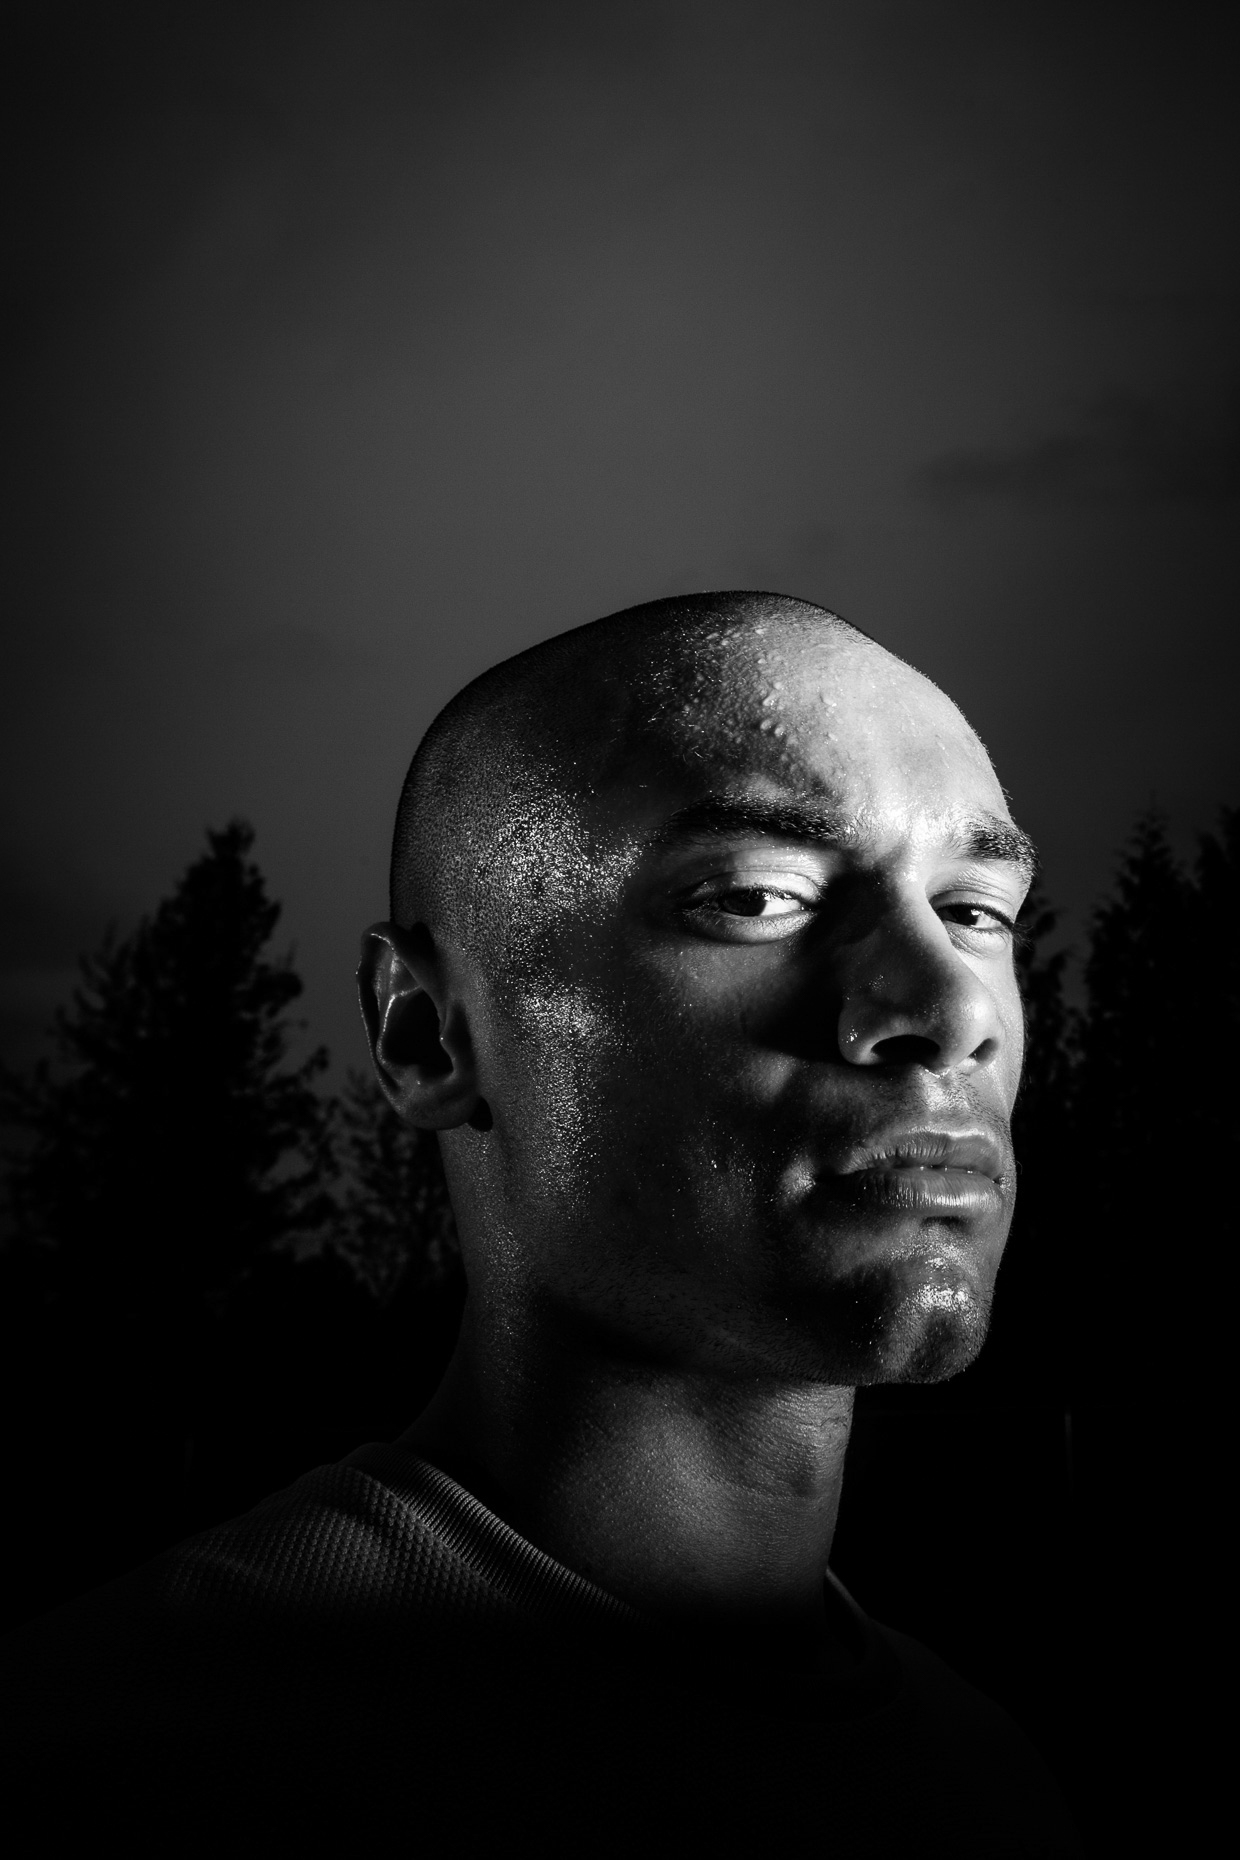 Editorial B&W portrait of Nike athlete Photo by Andy Batt